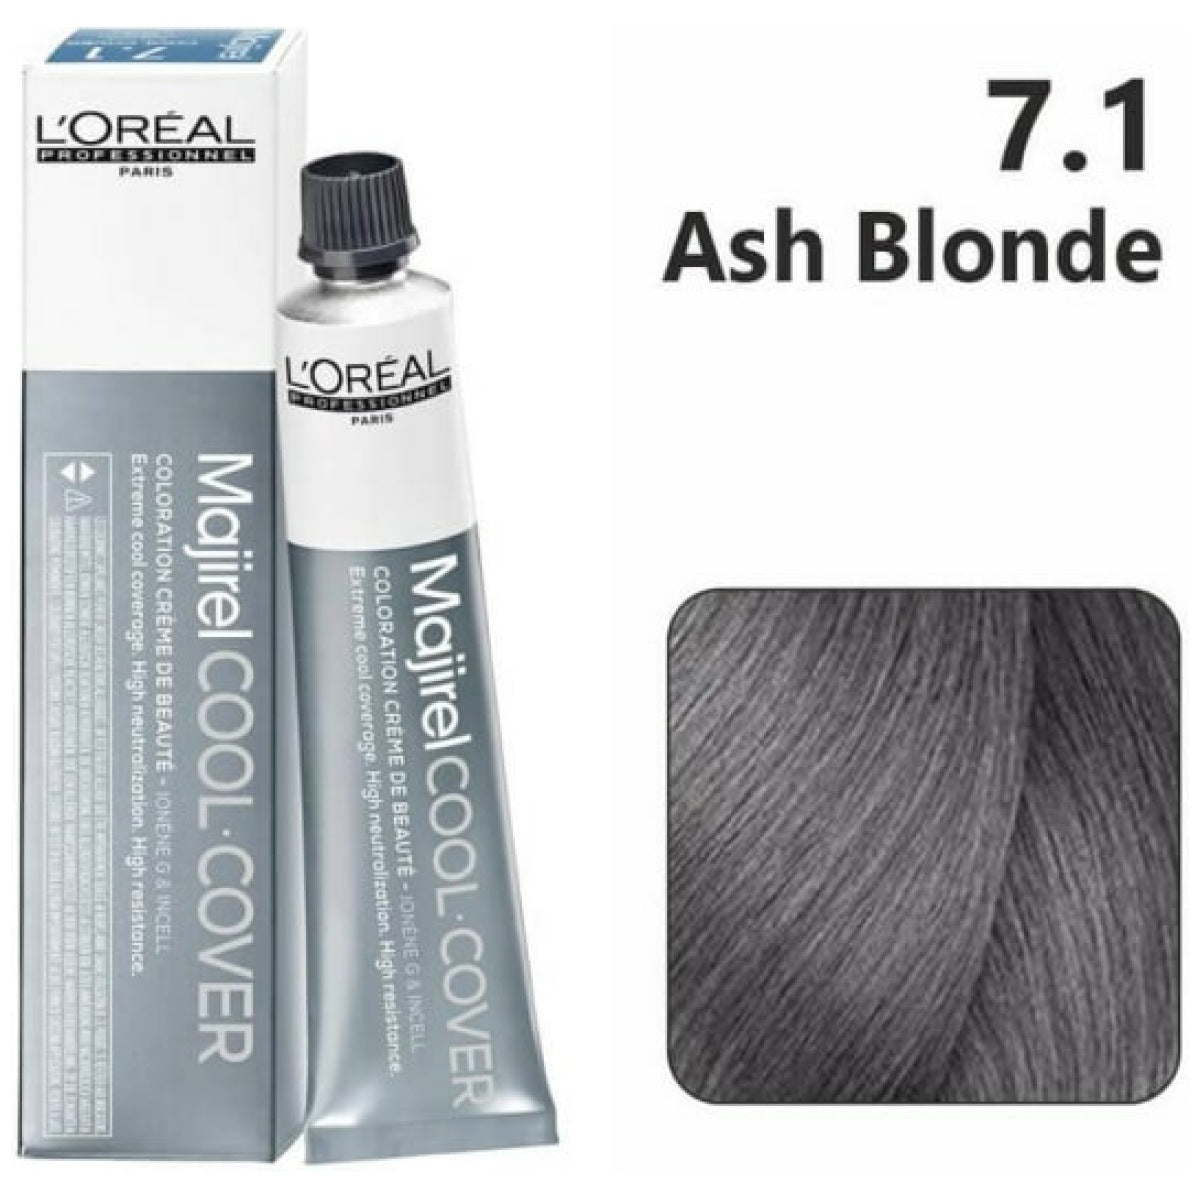 V.E Hair Salon - L'Oréal Majirel cool cover Ash Mocha Blonde